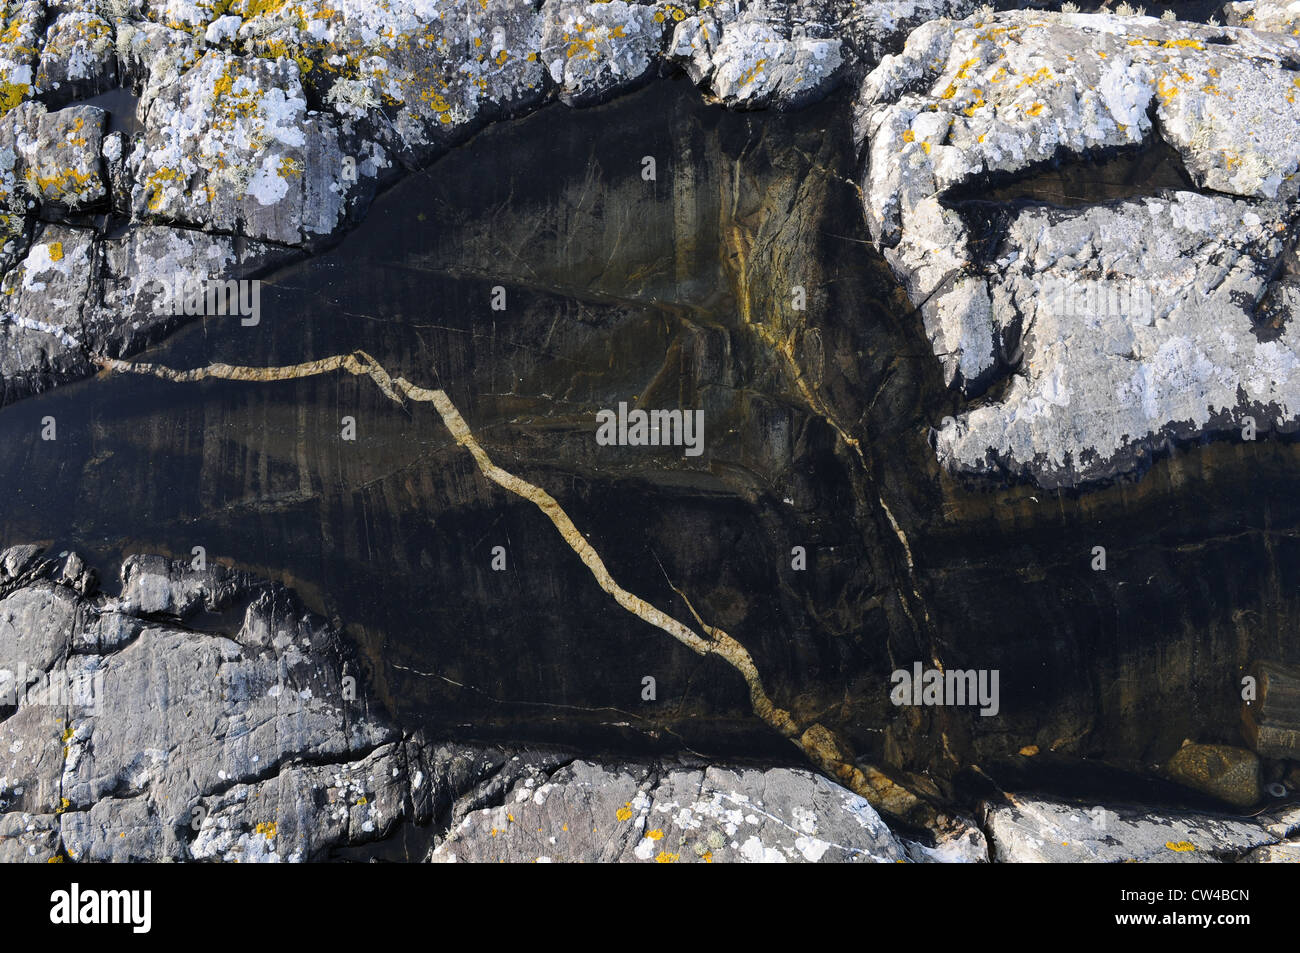 Rock pool with a white vain running through black stone, Lettermullan, Conamara, County Galway, Ireland Stock Photo